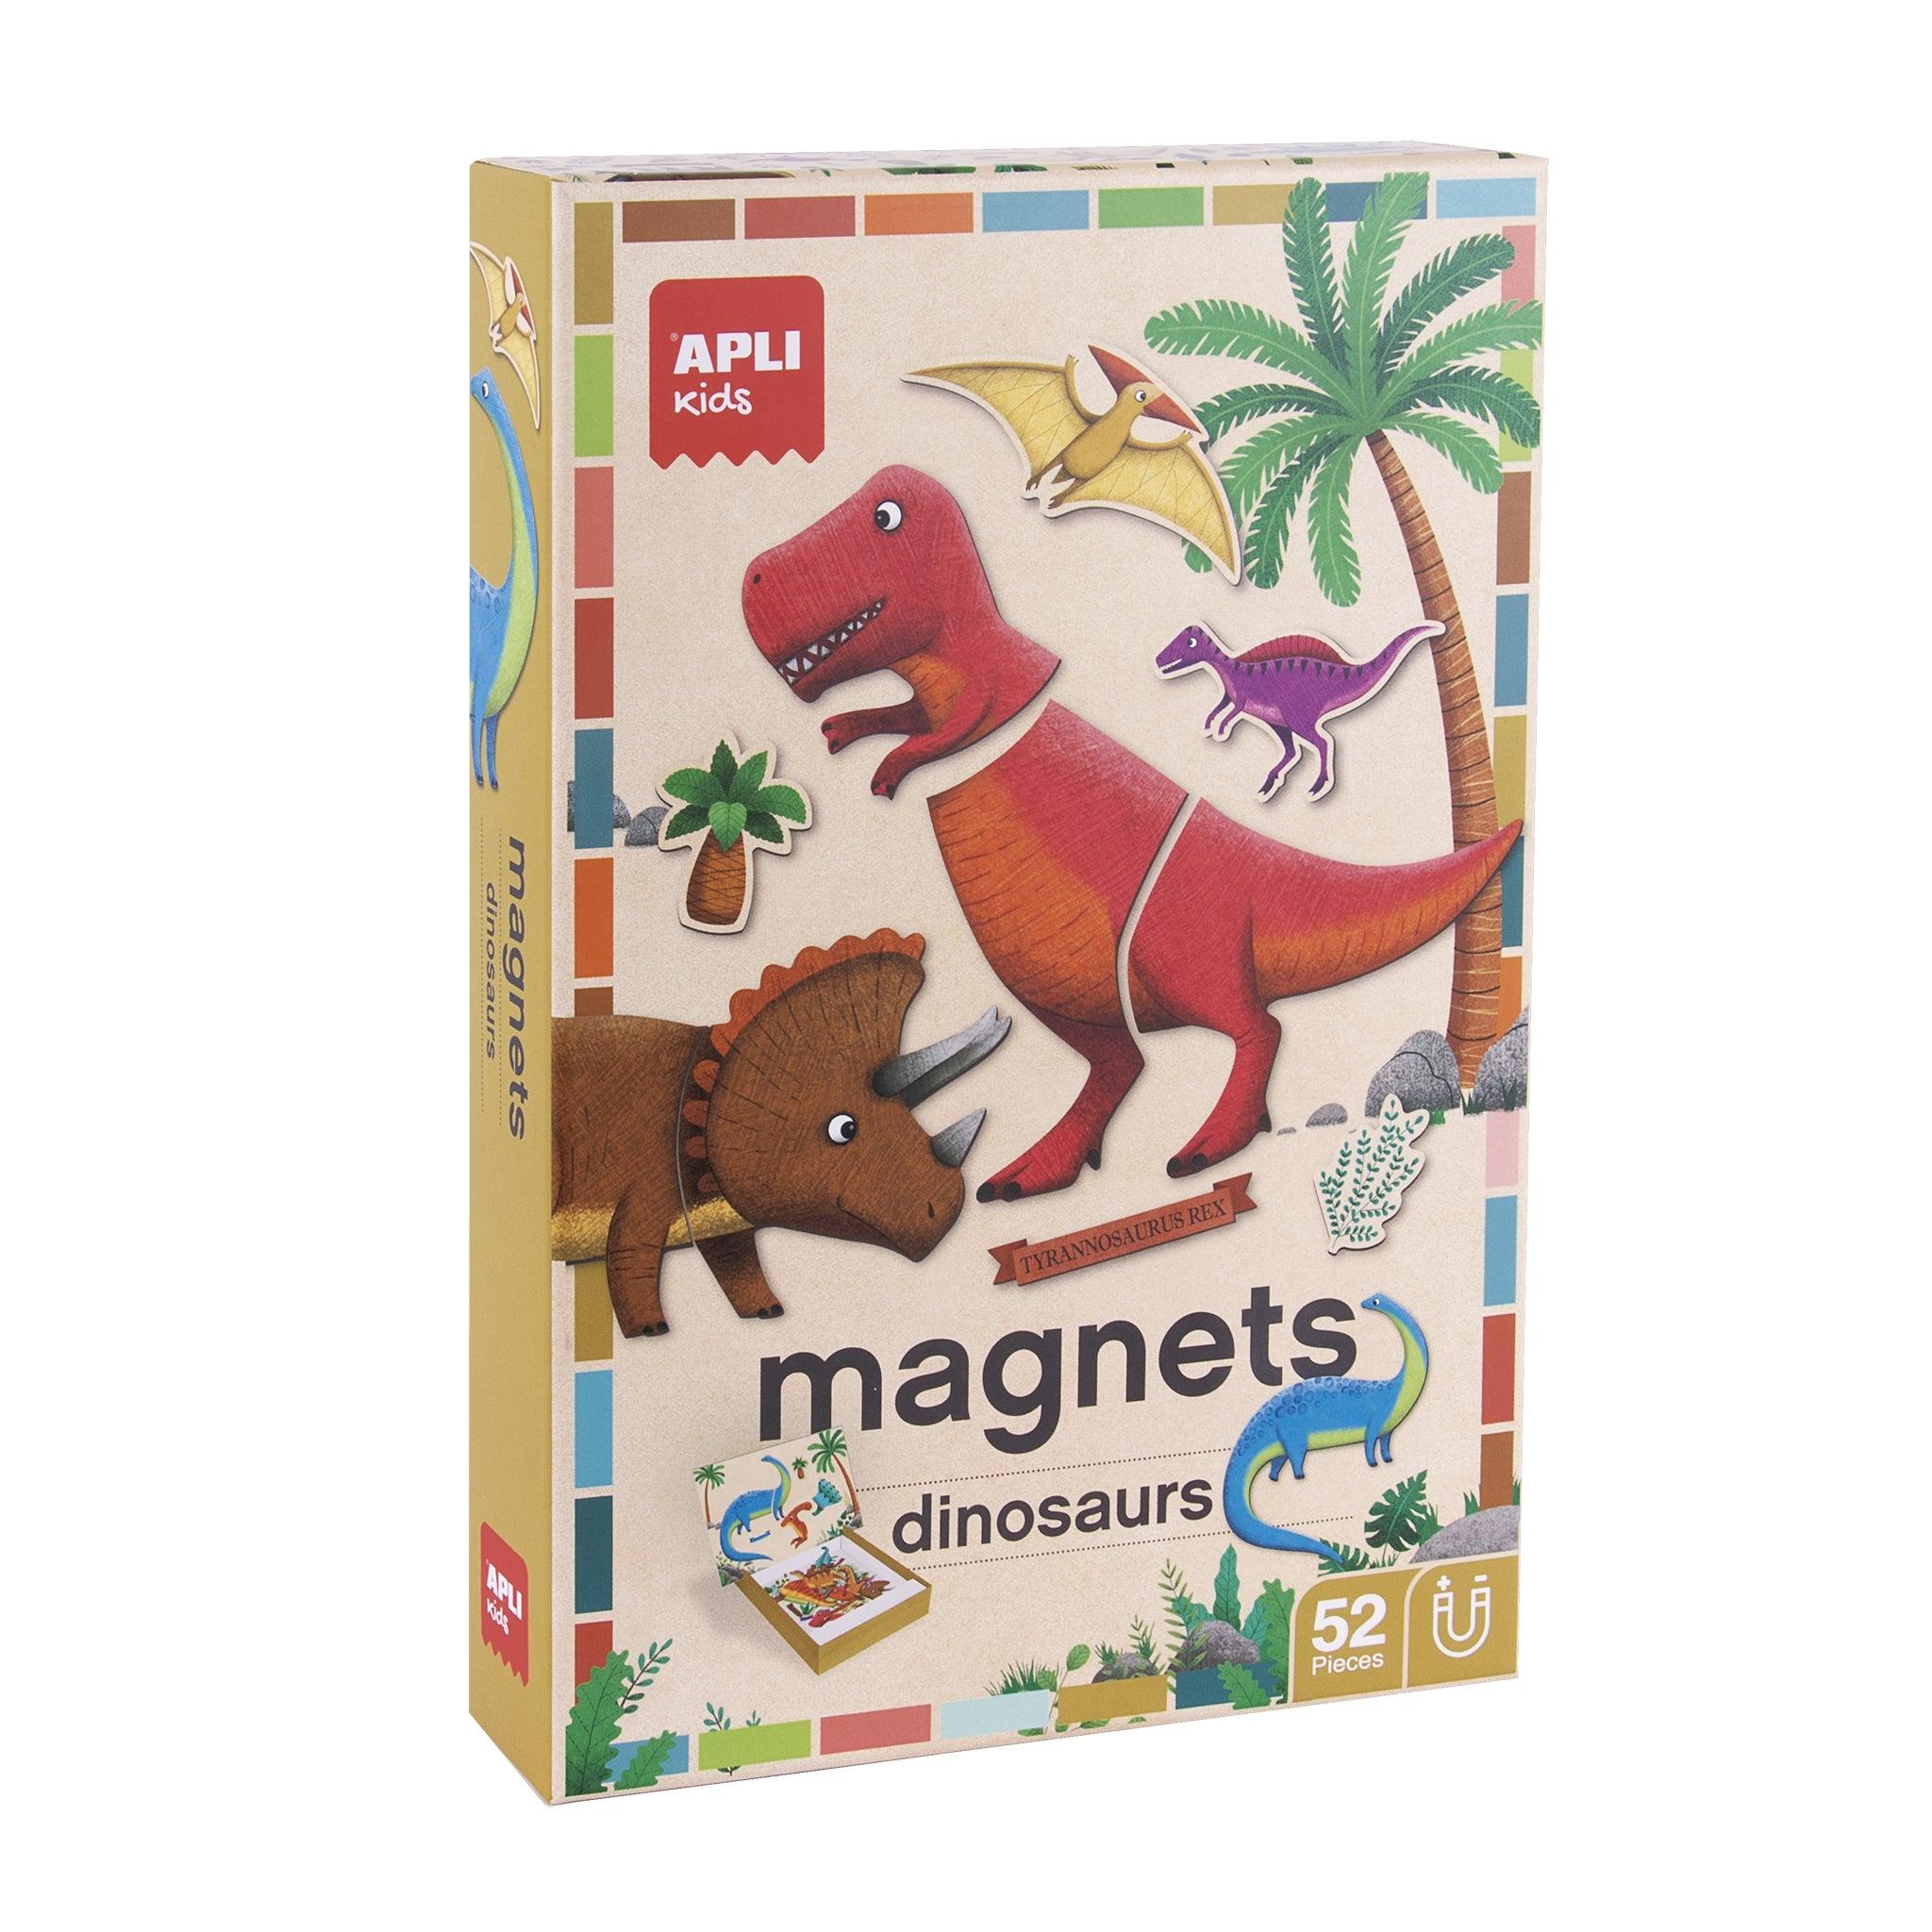 Apli Kids: rompecabezas de dinosaurios magnéticos